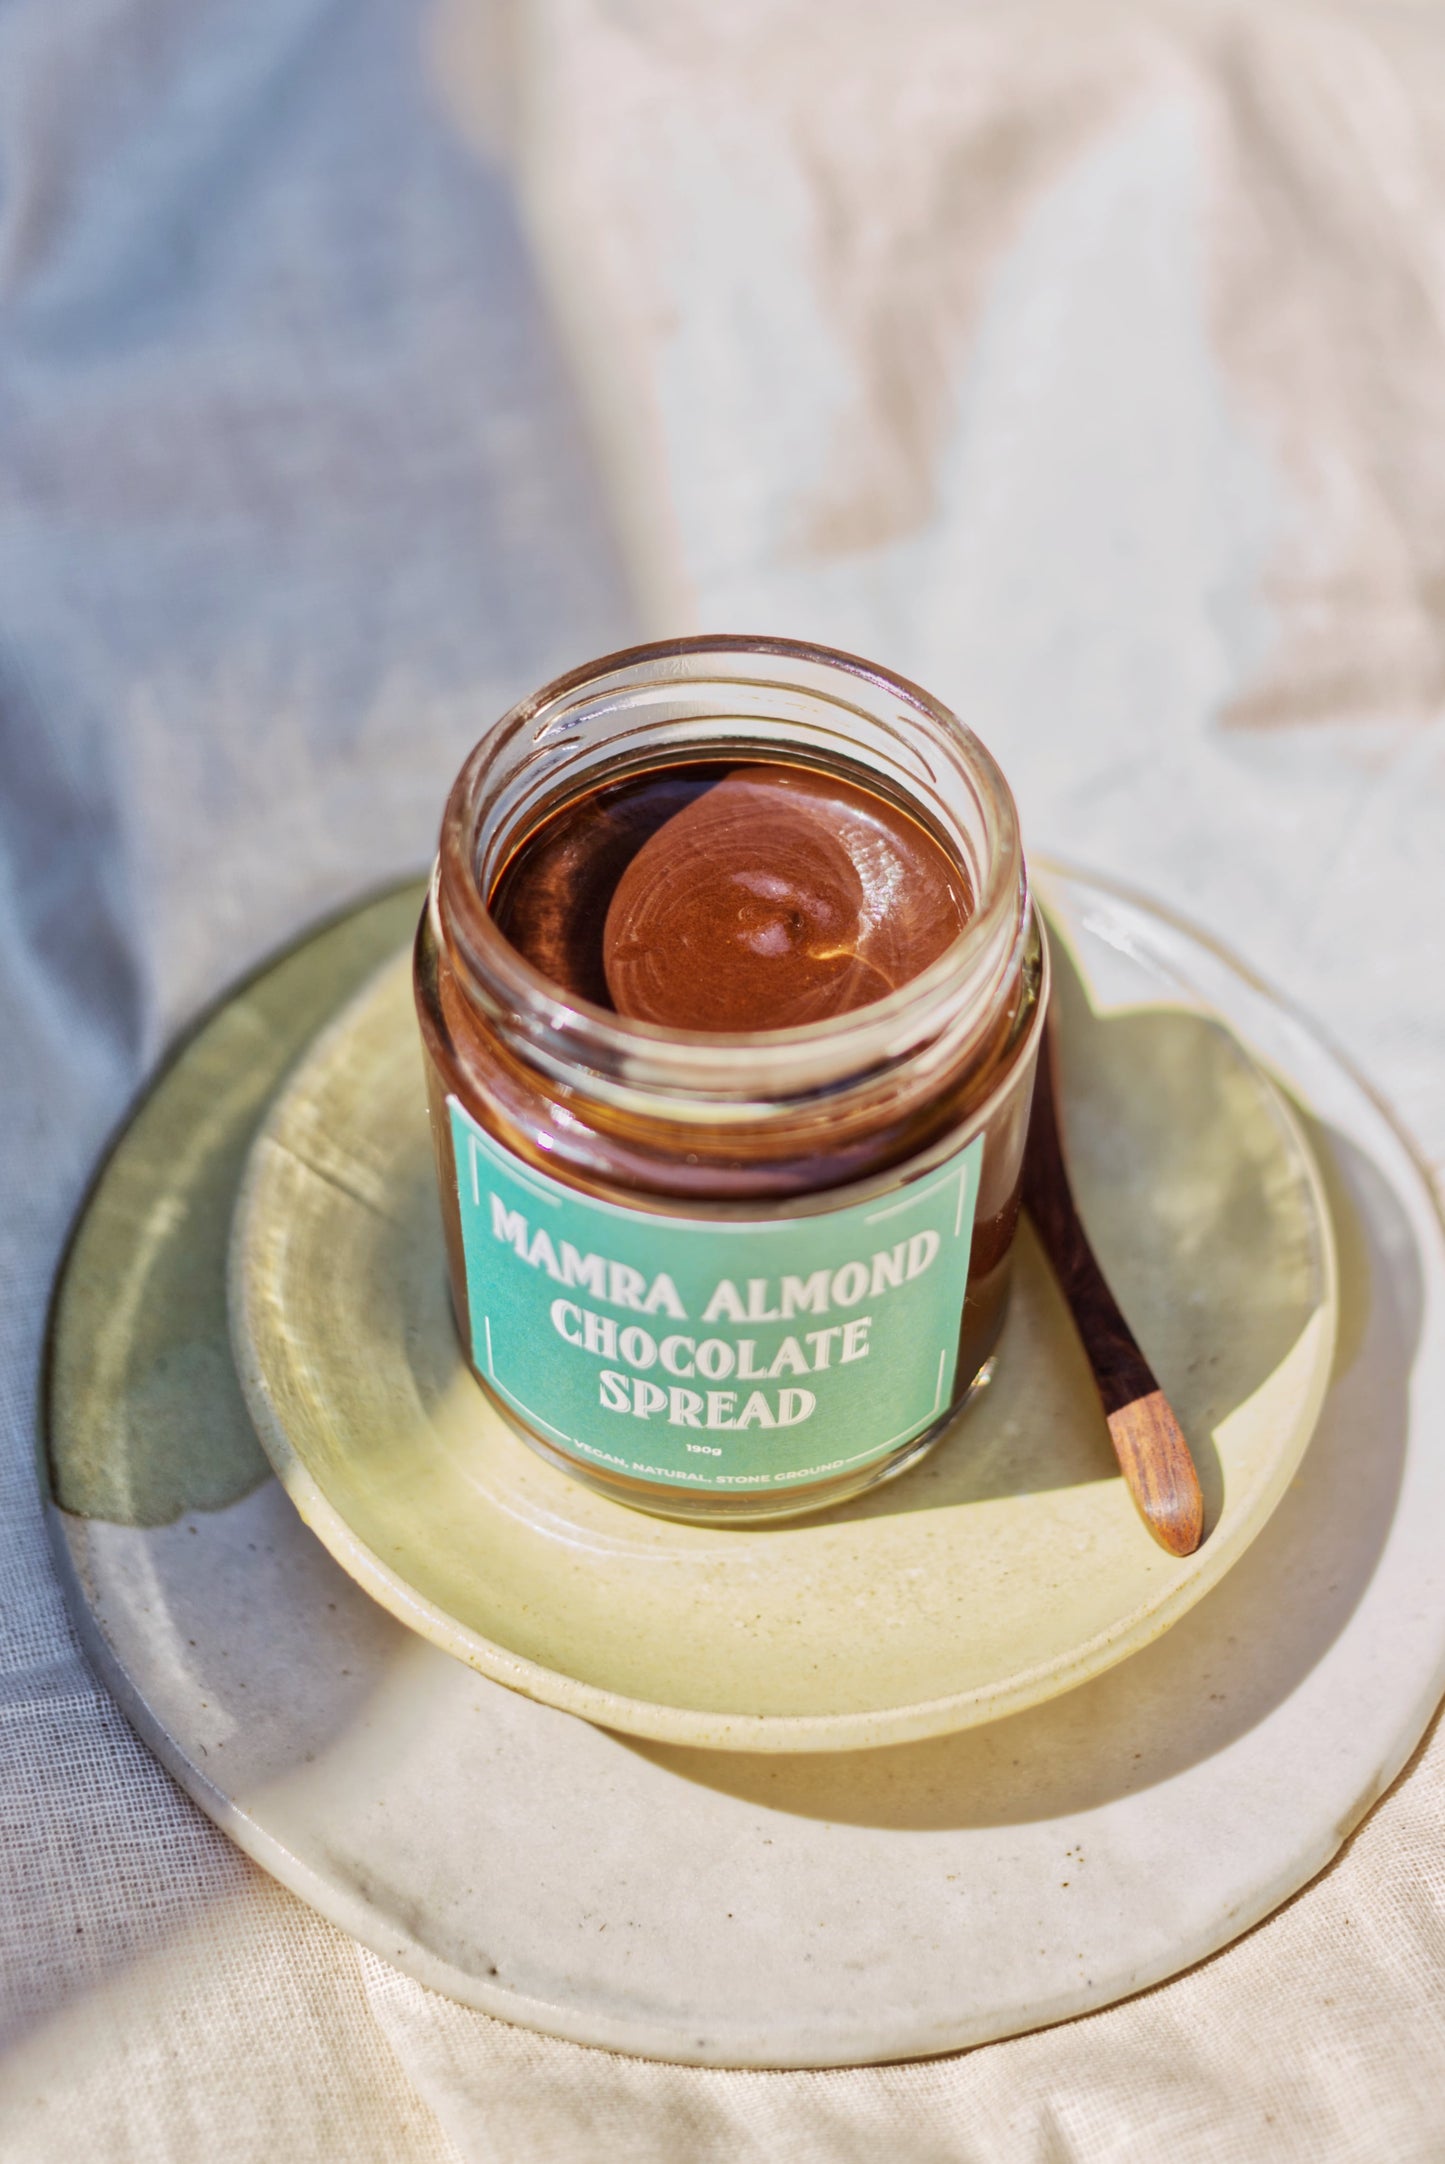 Mamra almond chocolate spread